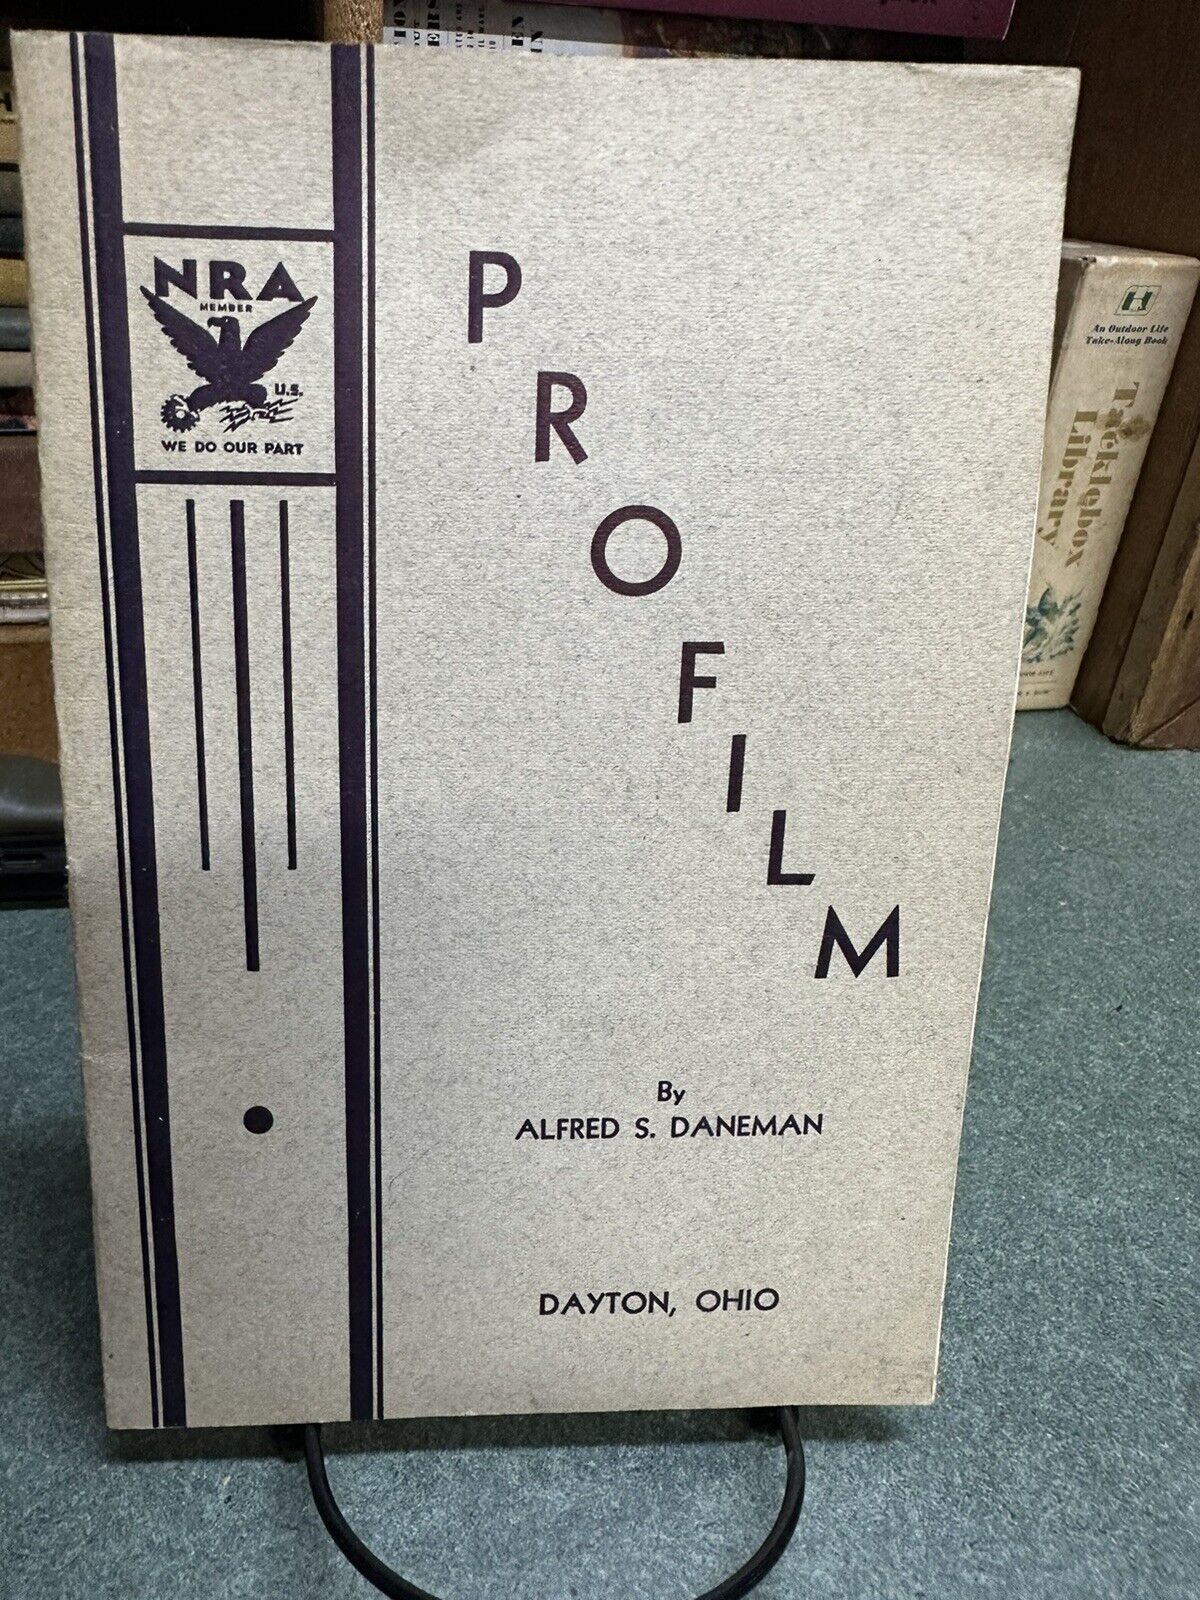 Achievement is Dominately Expressed in Profilm 1930s Dayton Ohio Booklet